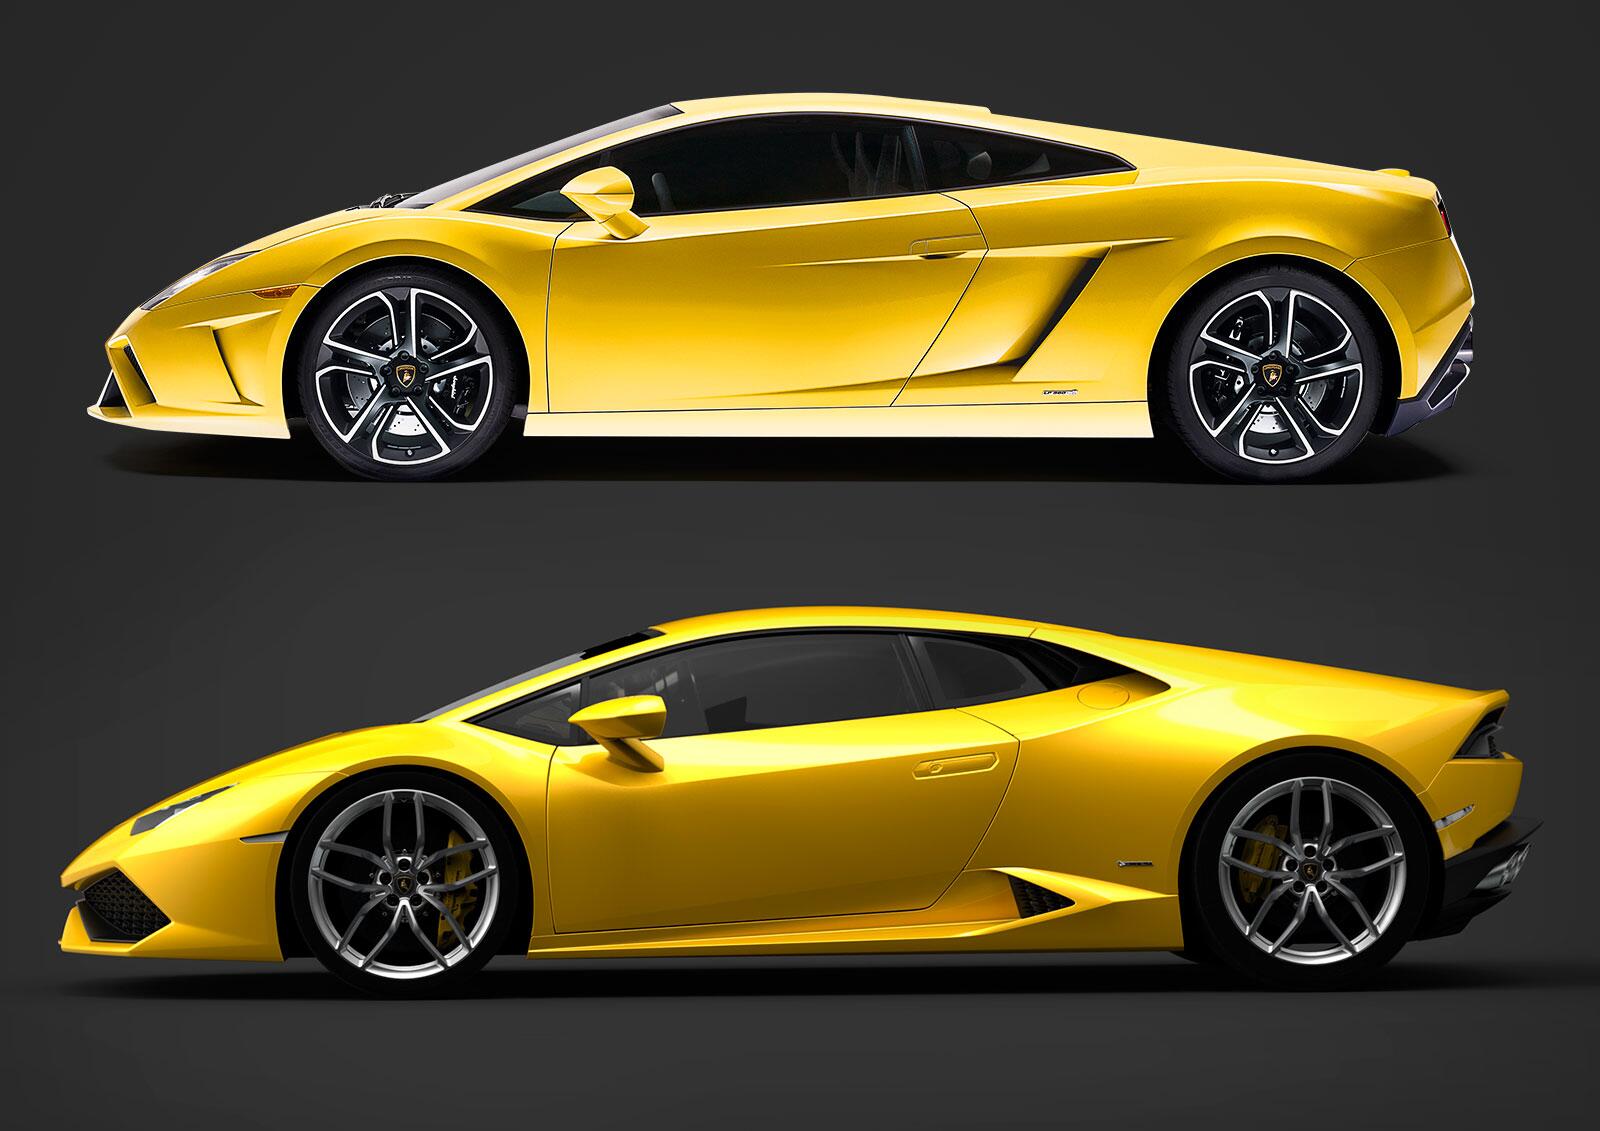 Car Body Design on X: #Lamborghini Gallardo and Huracán - side view  comparison (scale is approximate)  #cardesign   / X